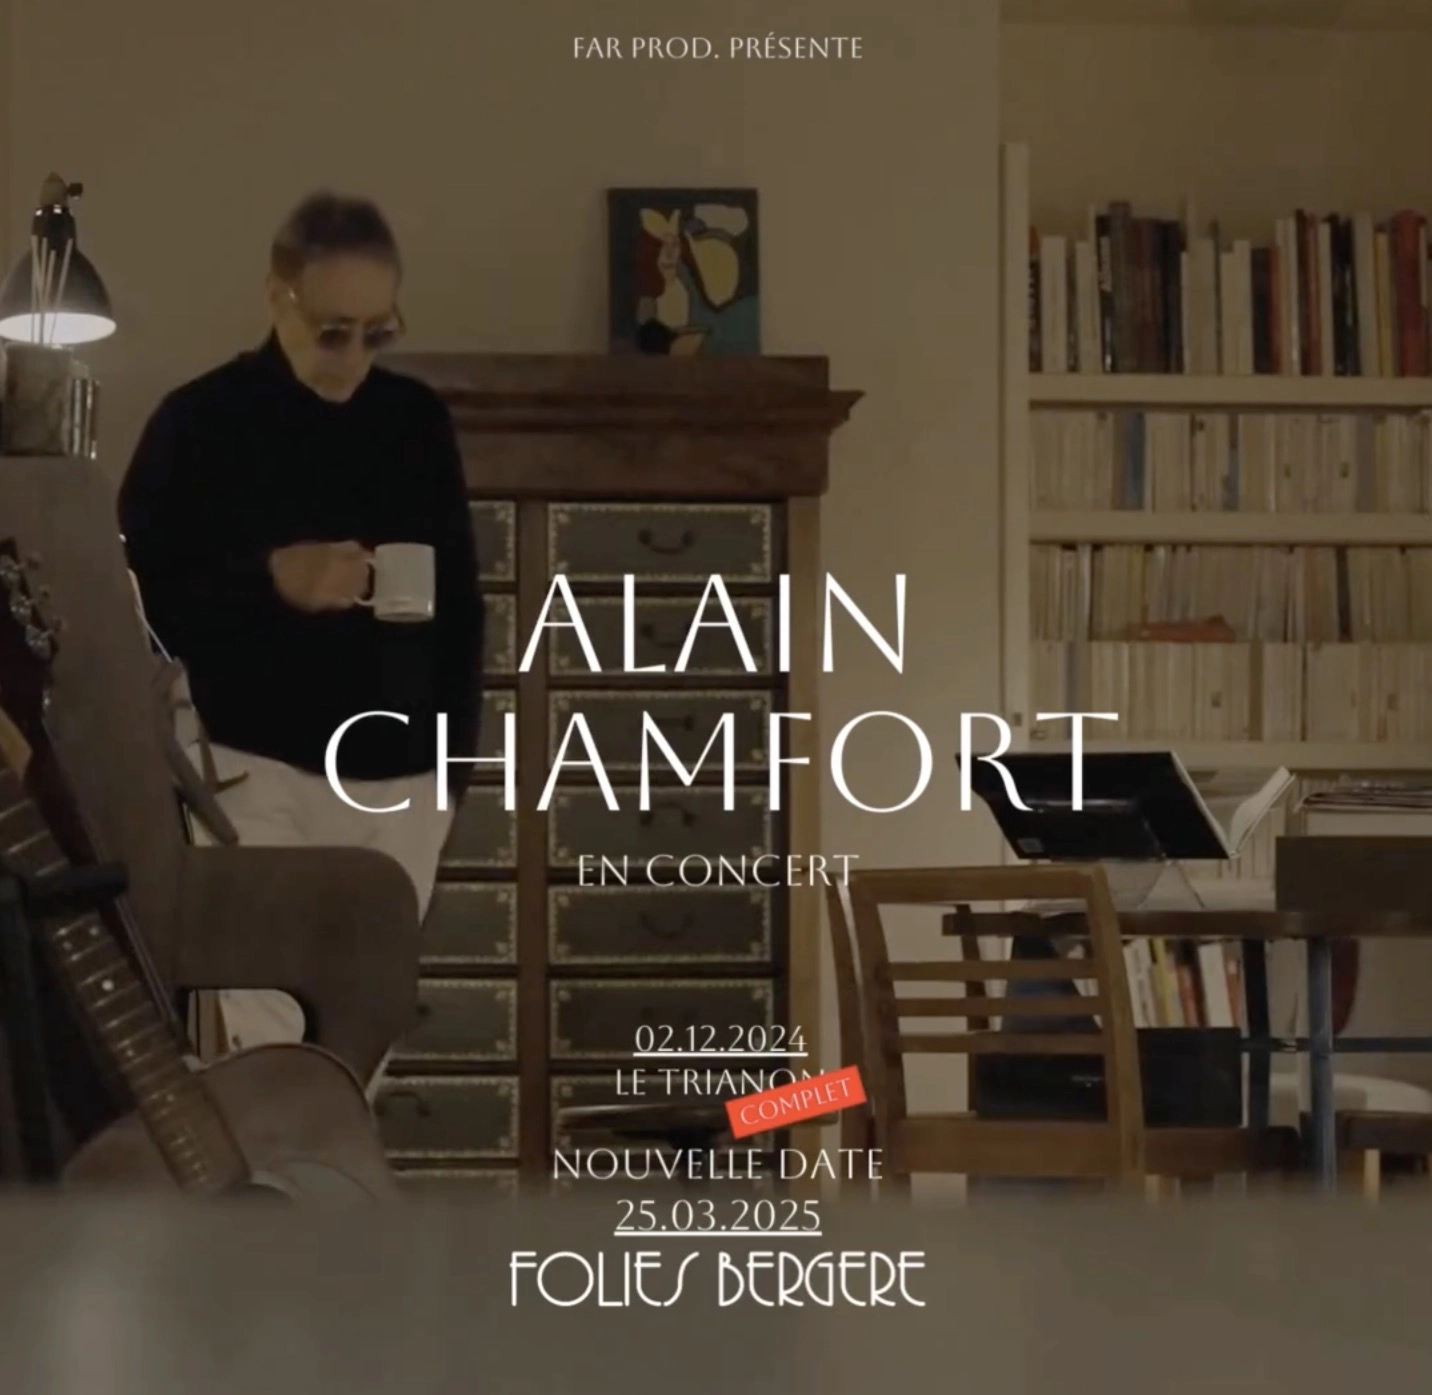 Billets Alain Chamfort (Folies Bergere - Paris)